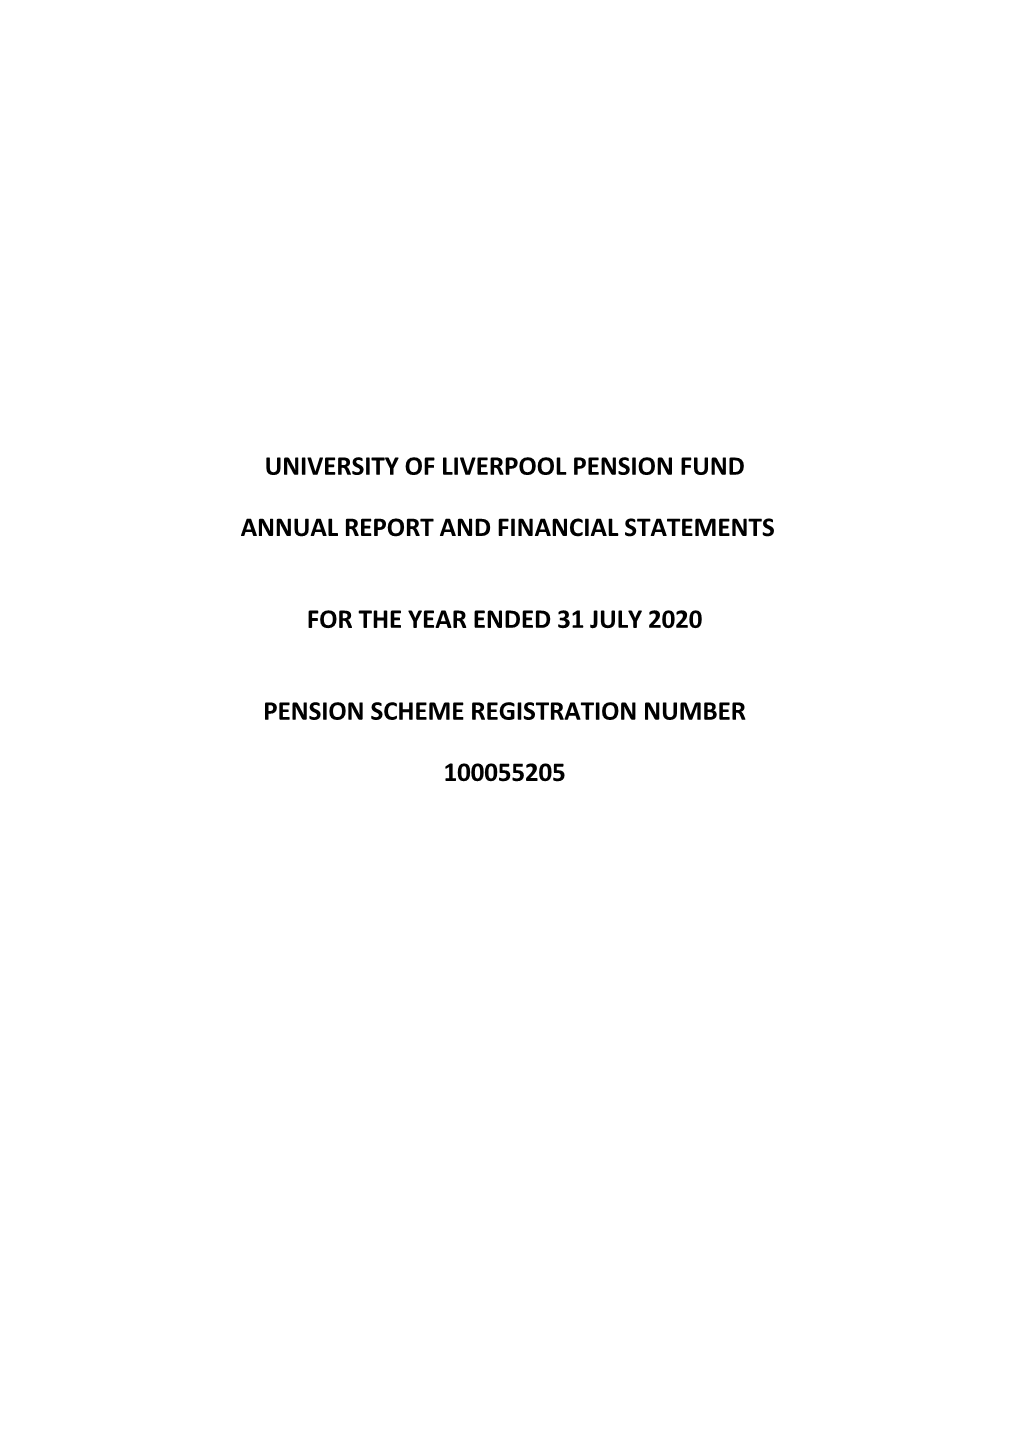 University of Liverpool Pension Fund